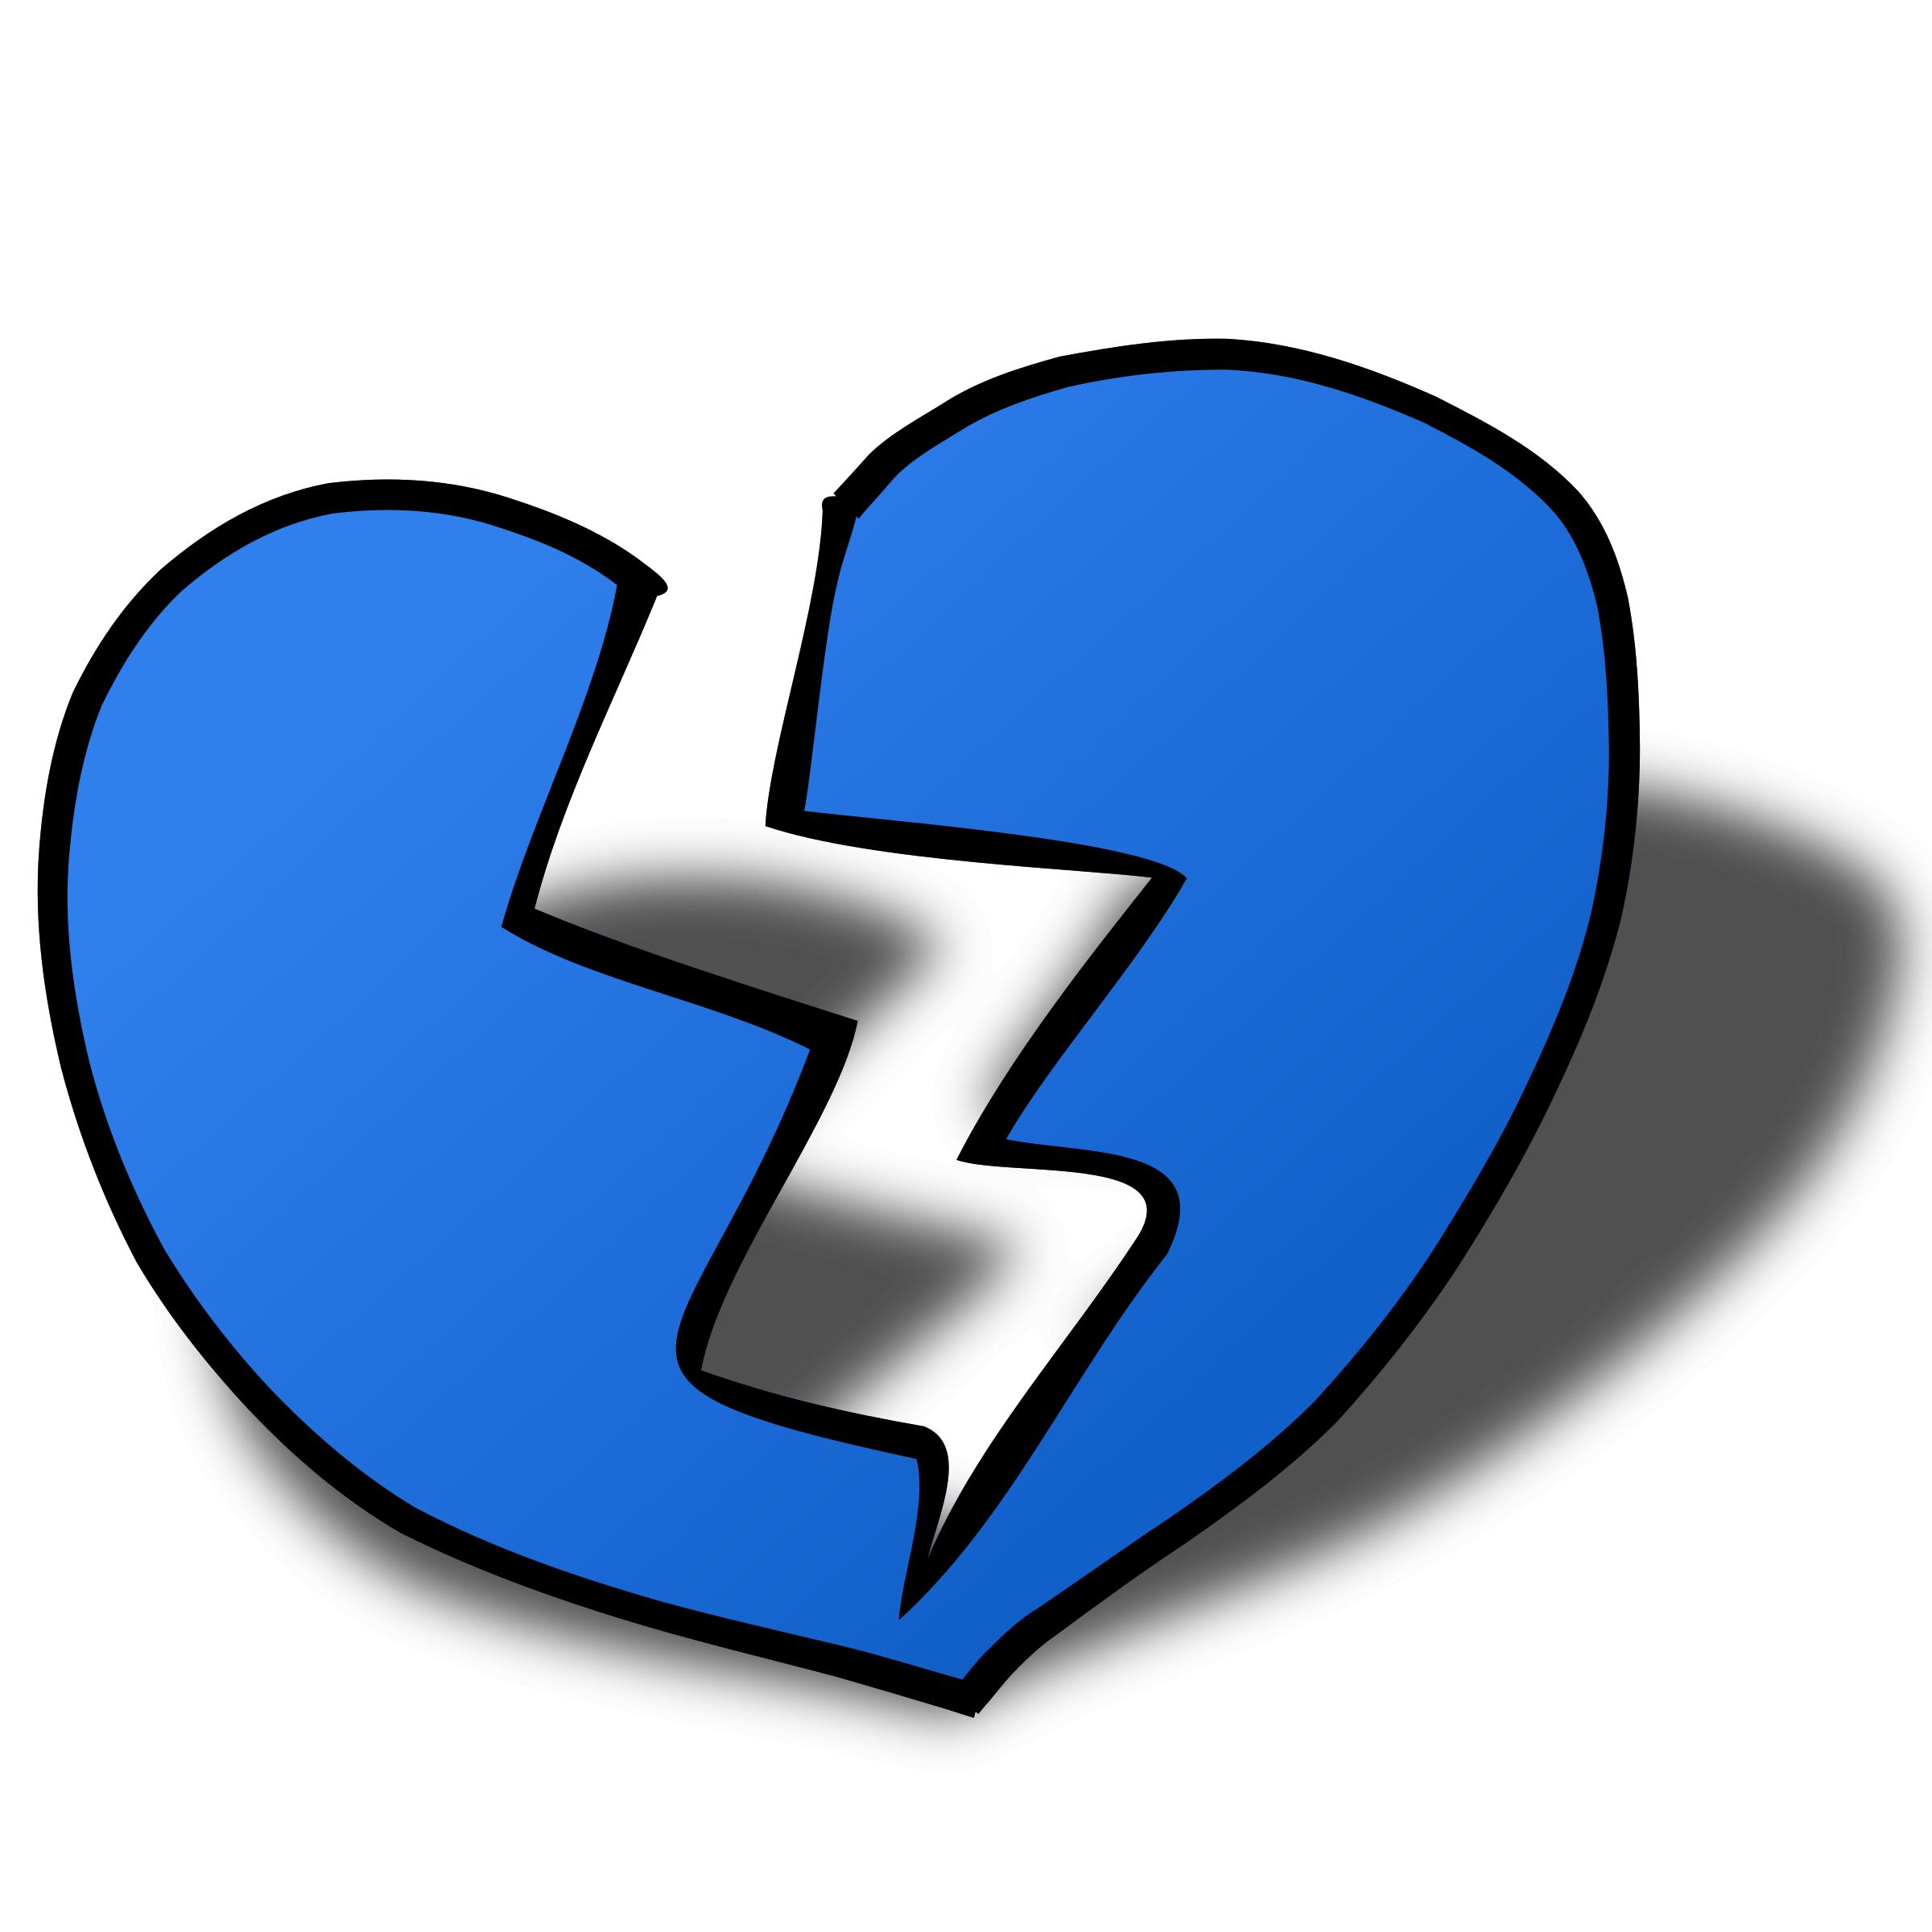 Blue Broken Heart icons